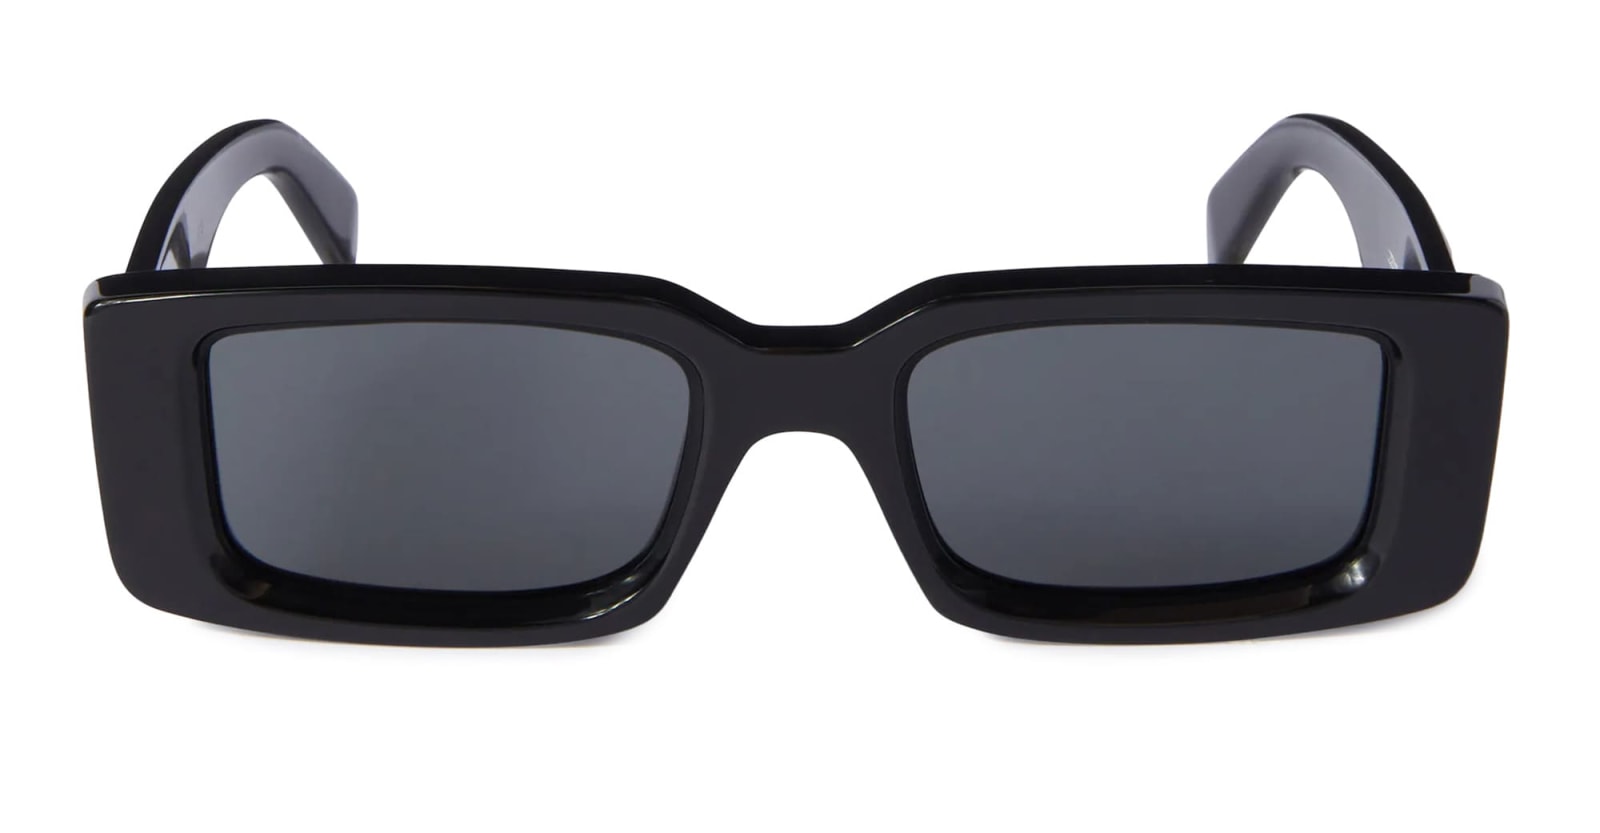 Off-white Arthur - Black / Dark Grey Sunglasses